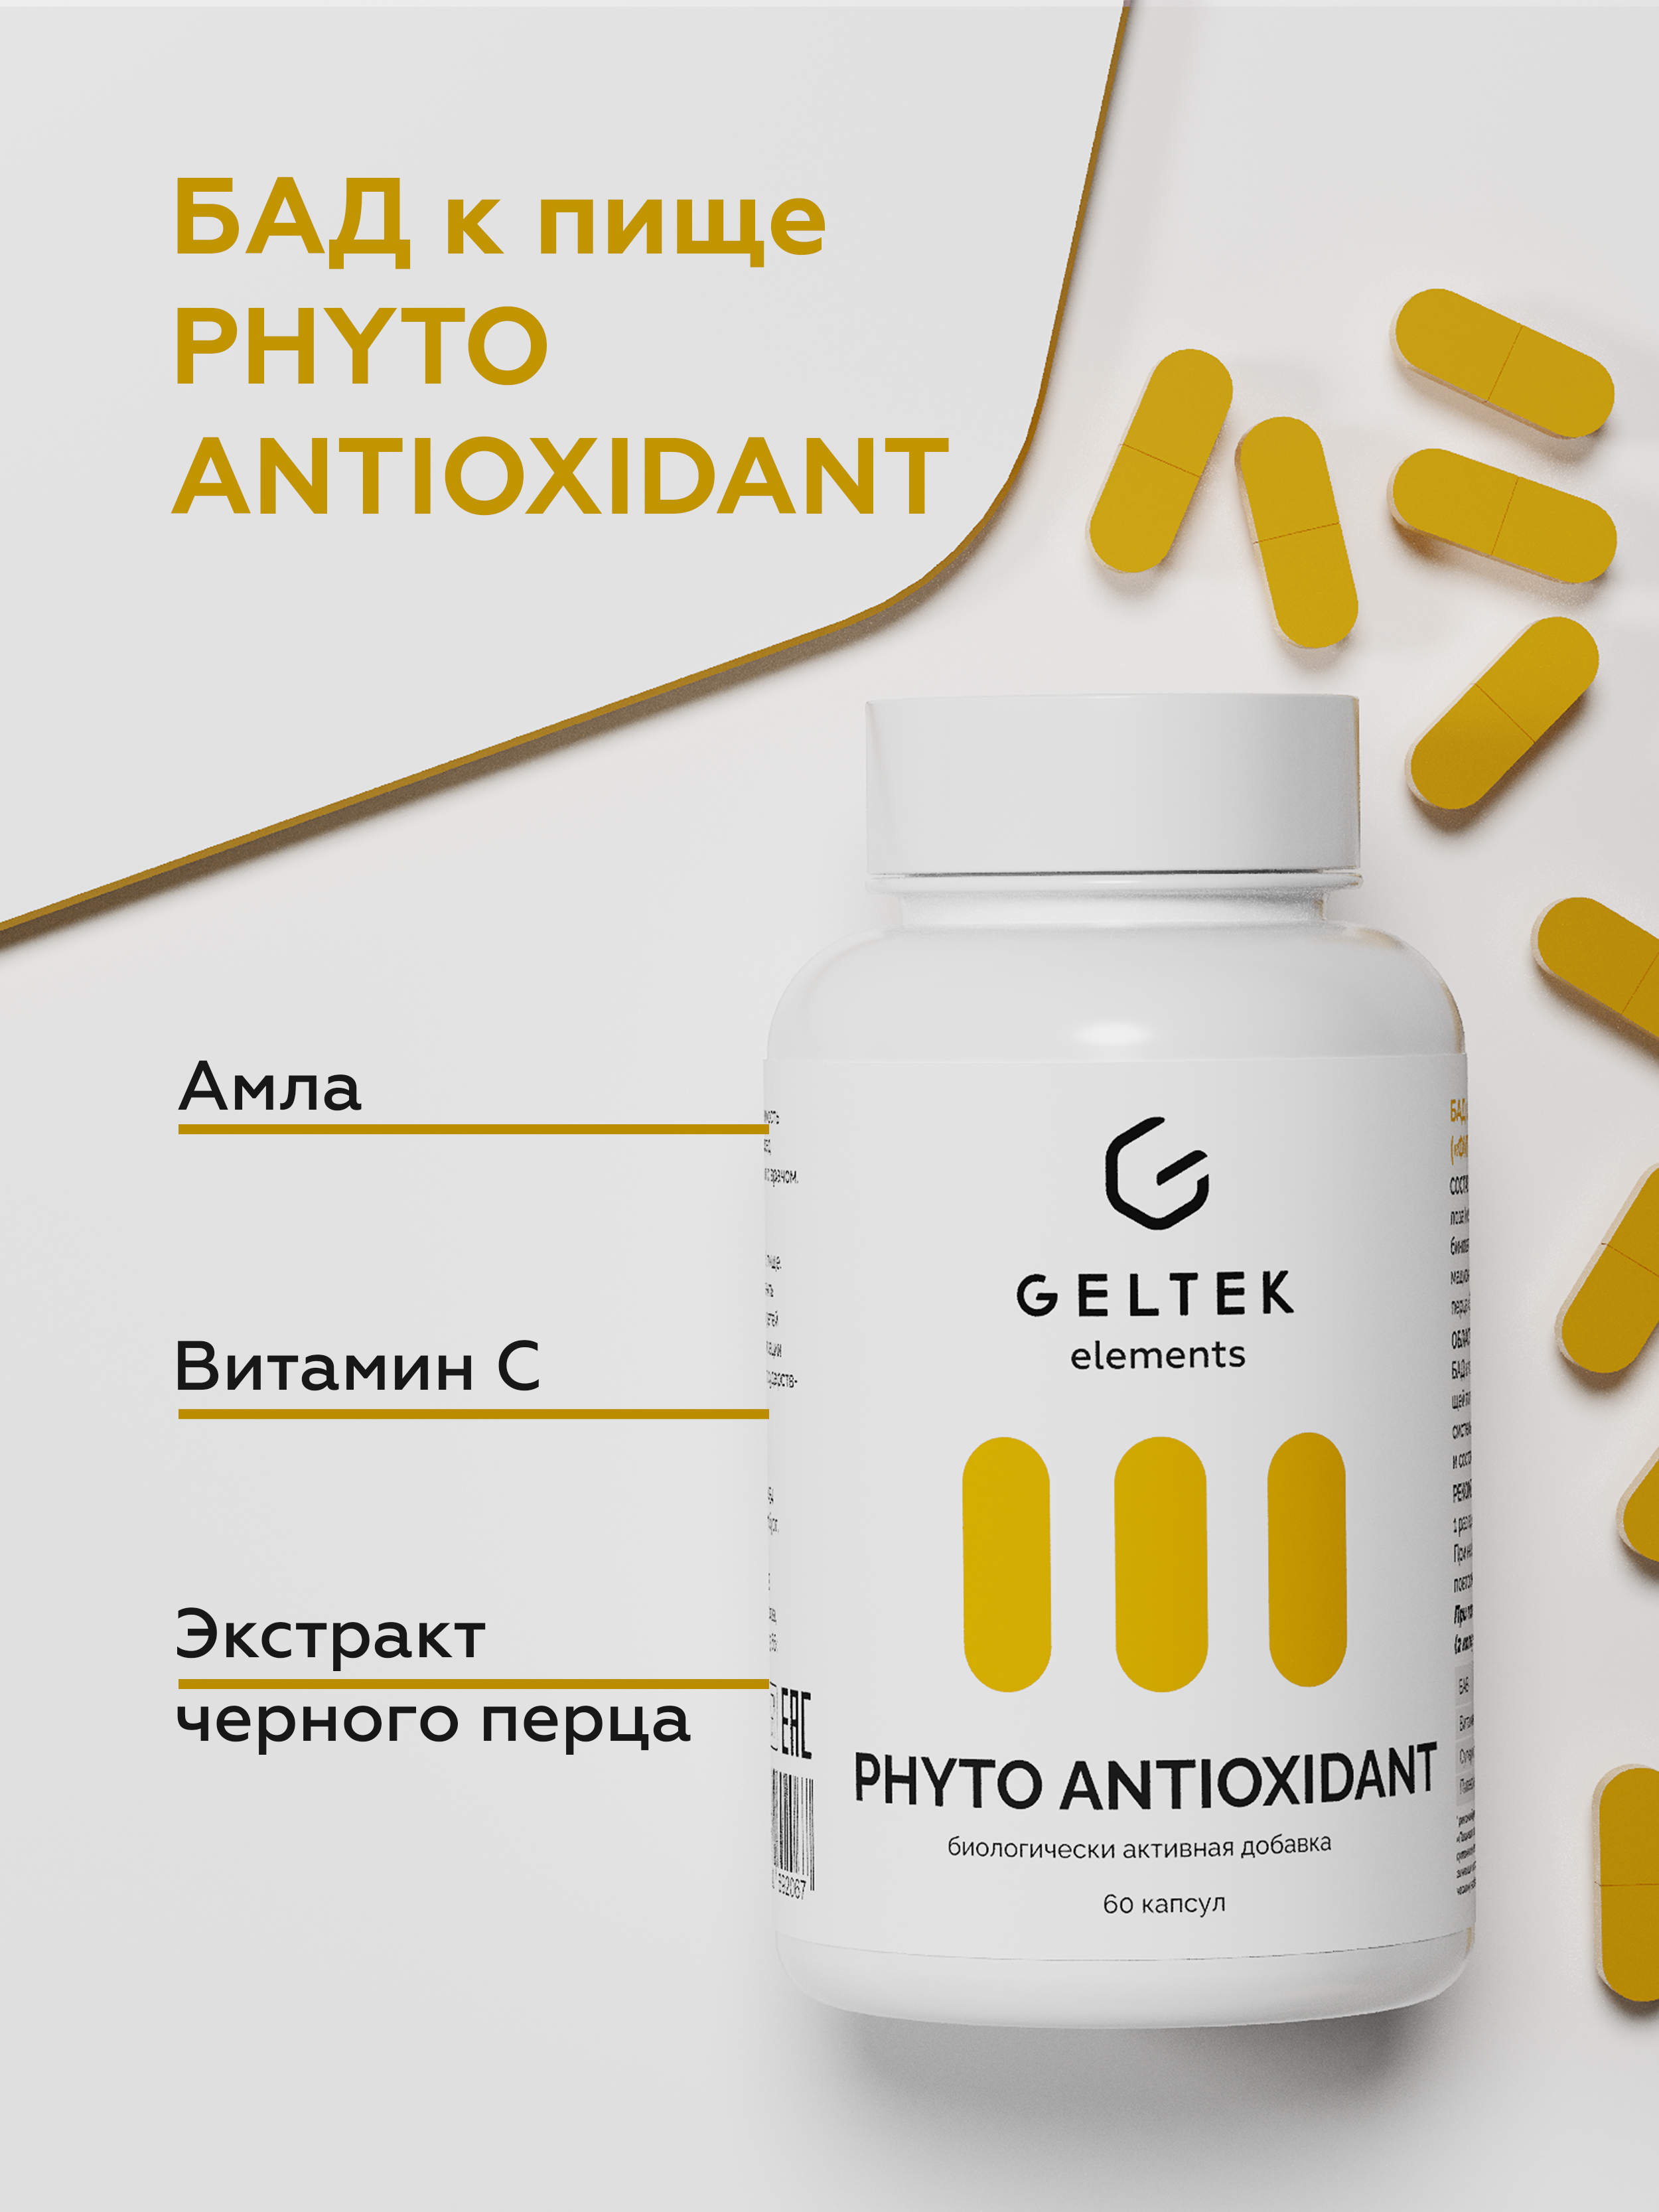 Food supplement PHYTO ANTIOXIDANT